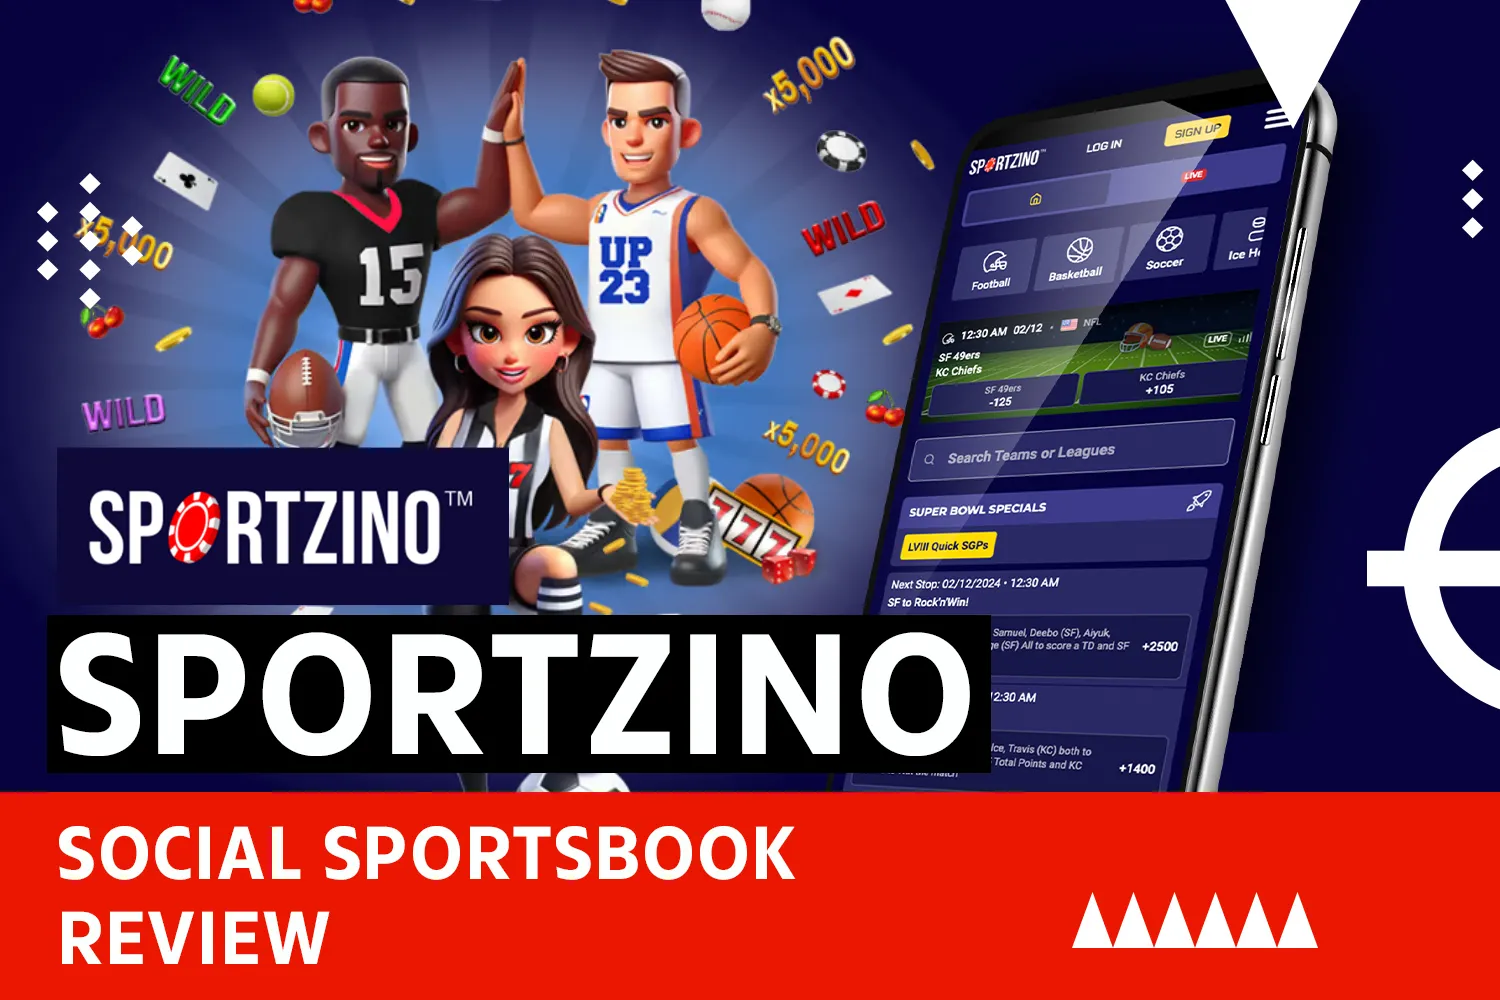 Sportzino social sportsbook and casino - 150,000 GC + 6 SC in bonus